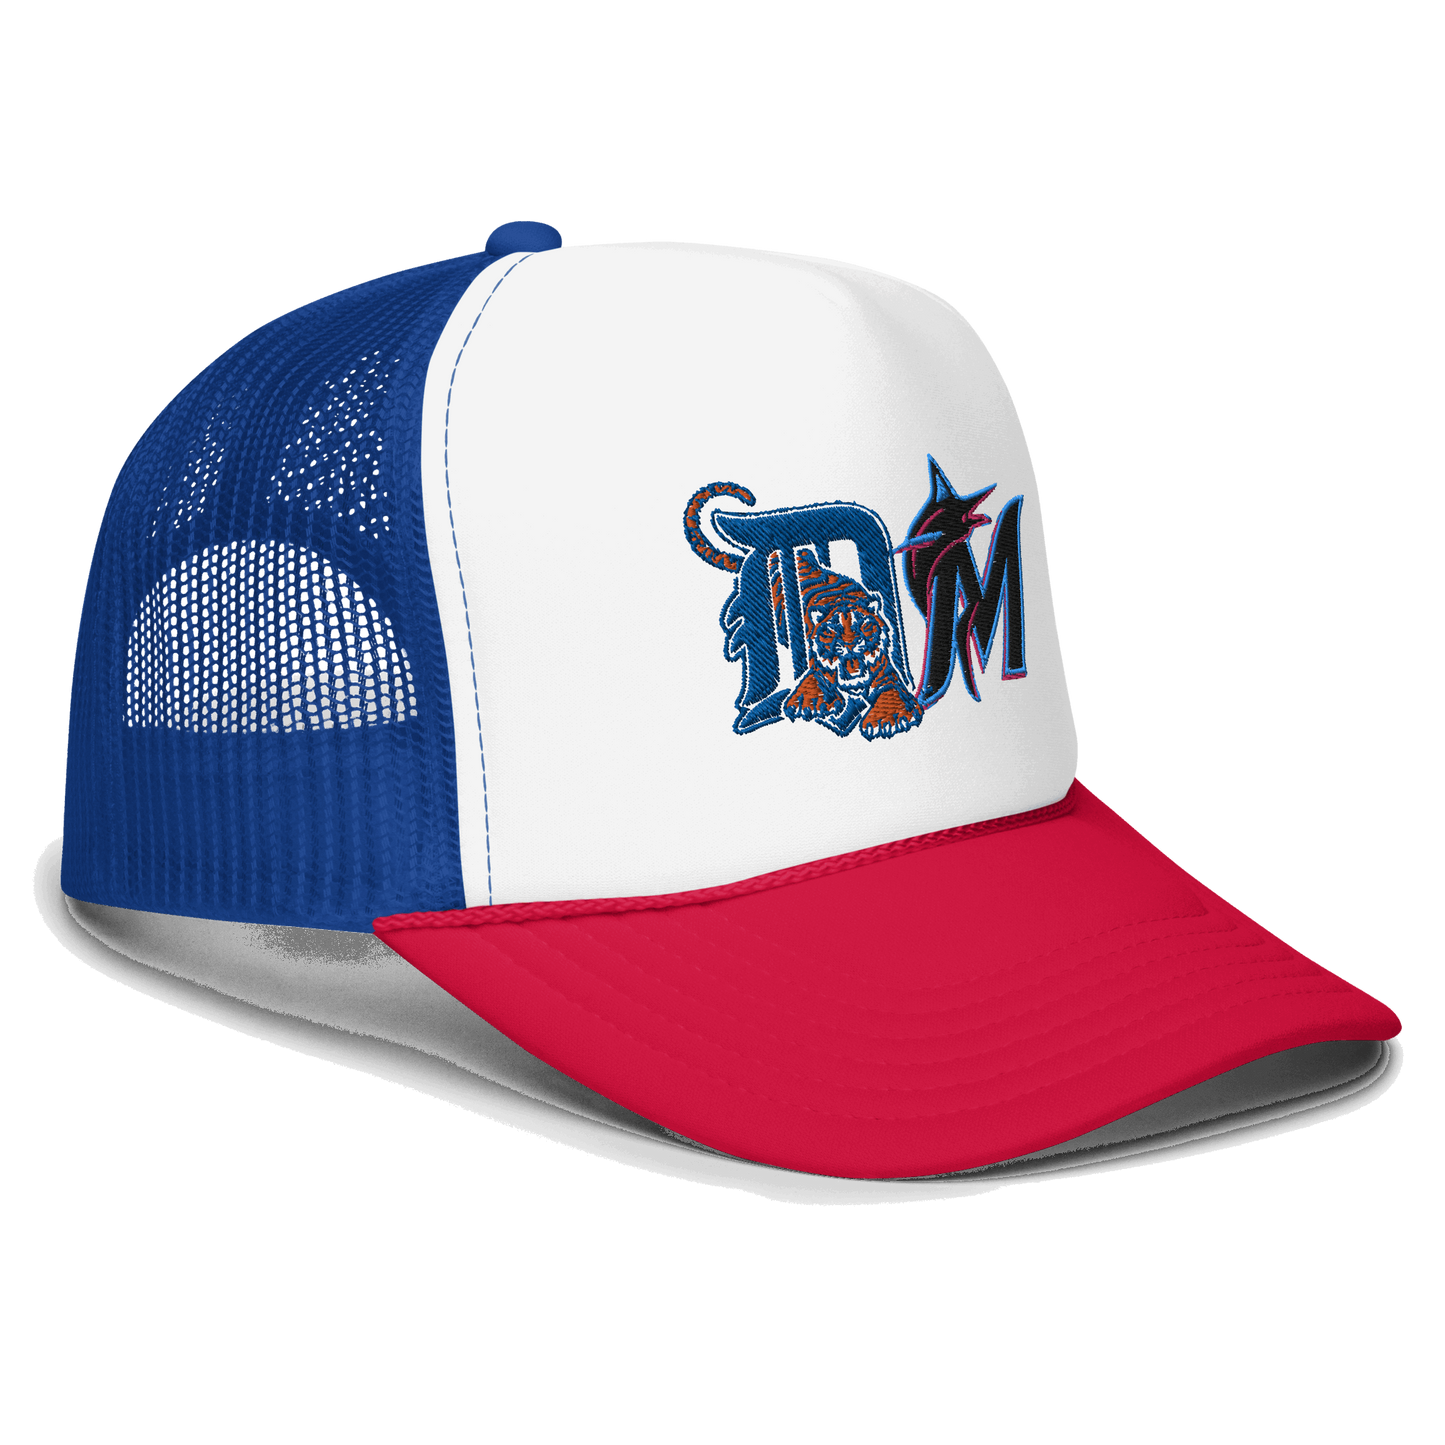 MLB DM Foam trucker hat